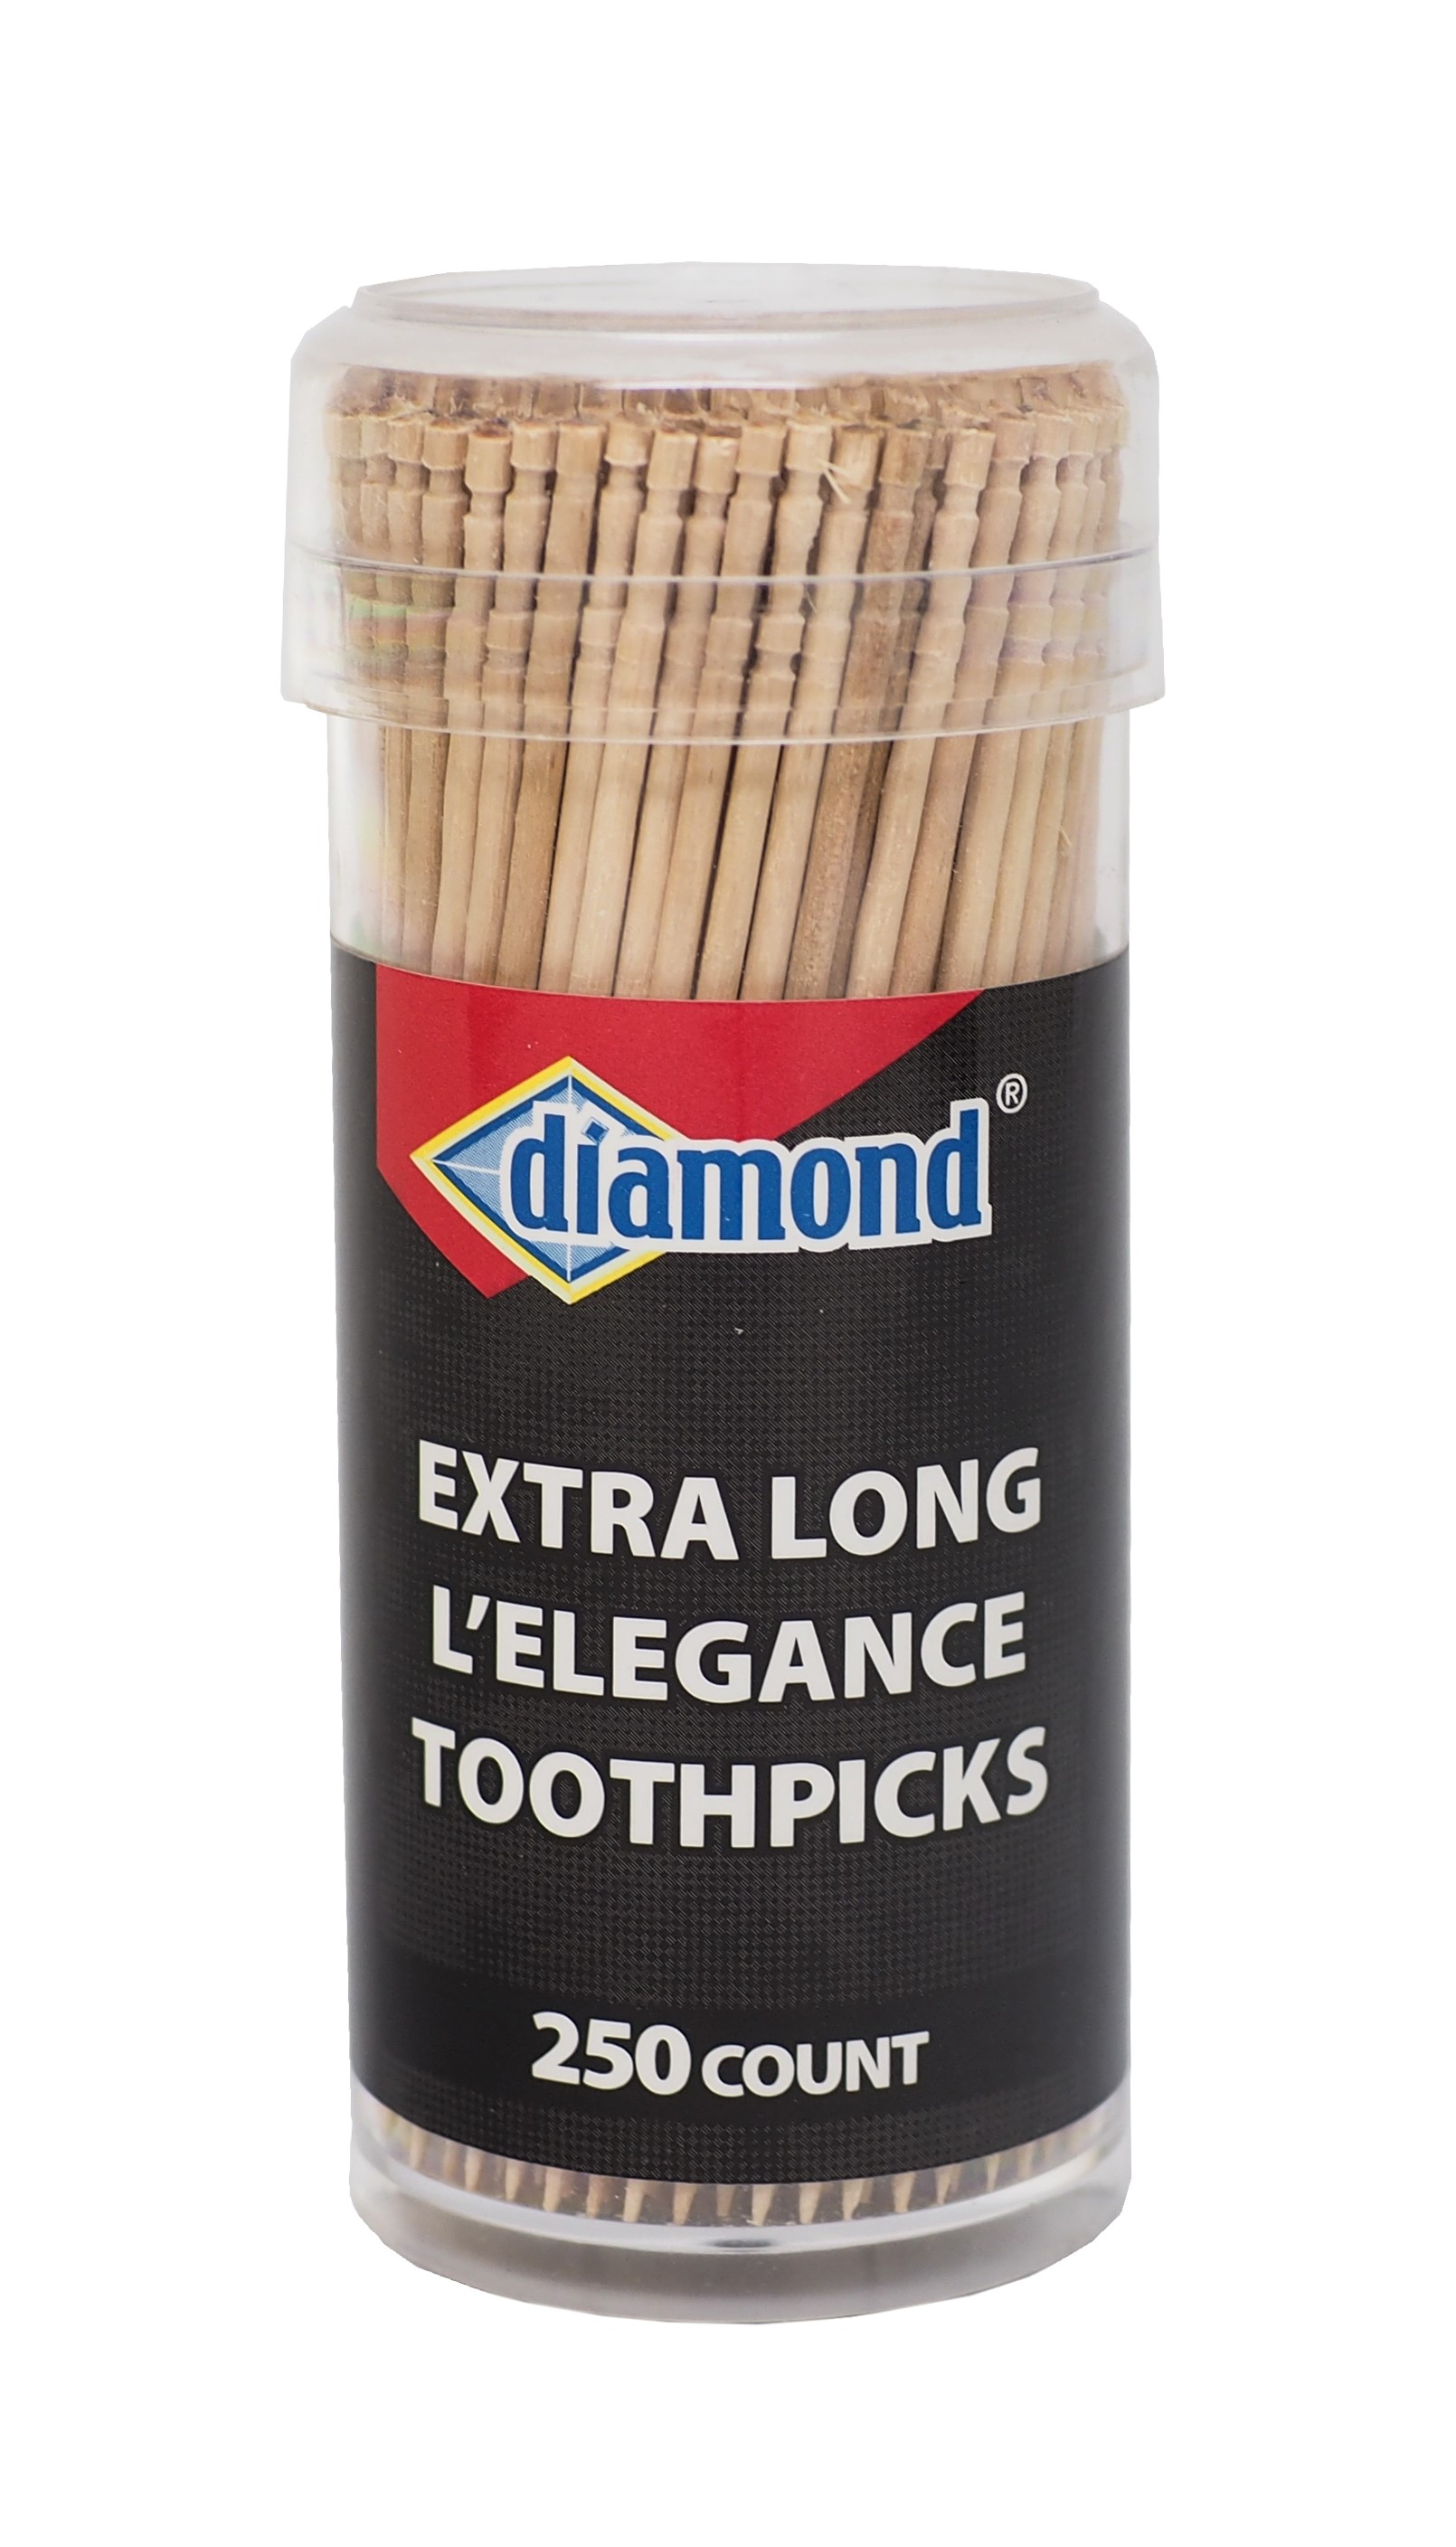 Diamond Elegance Long Toothpicks, 250-Count - Walmart.com